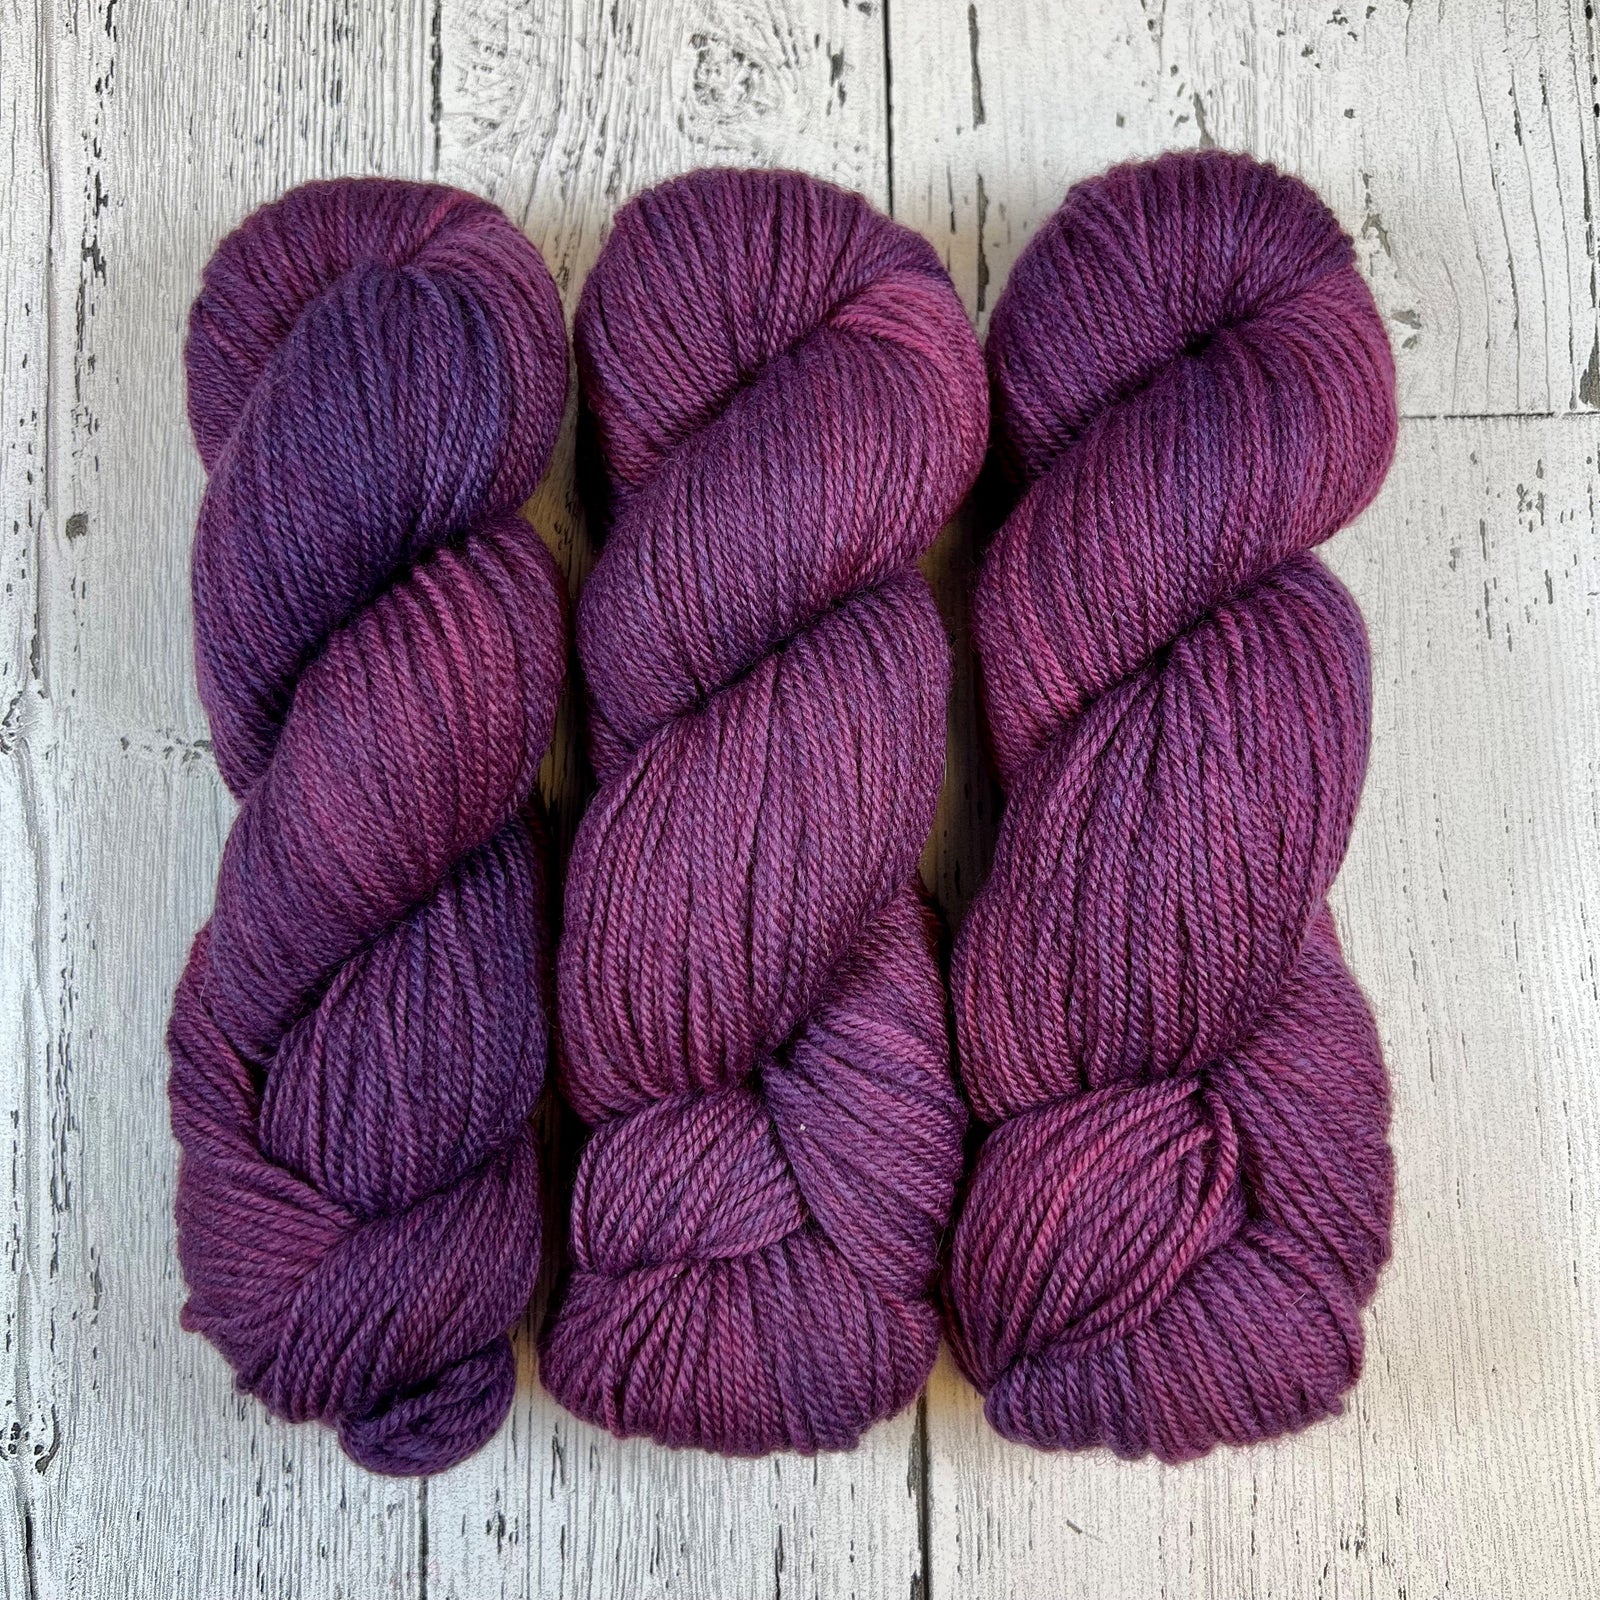 Estako Cake 100% Acrylic Multicolor Yarn, DK - Light Worsted #3 for Crochet  and Knitting 3.5 Oz (100g) / 394 Yrds (360m) (Color - 313)